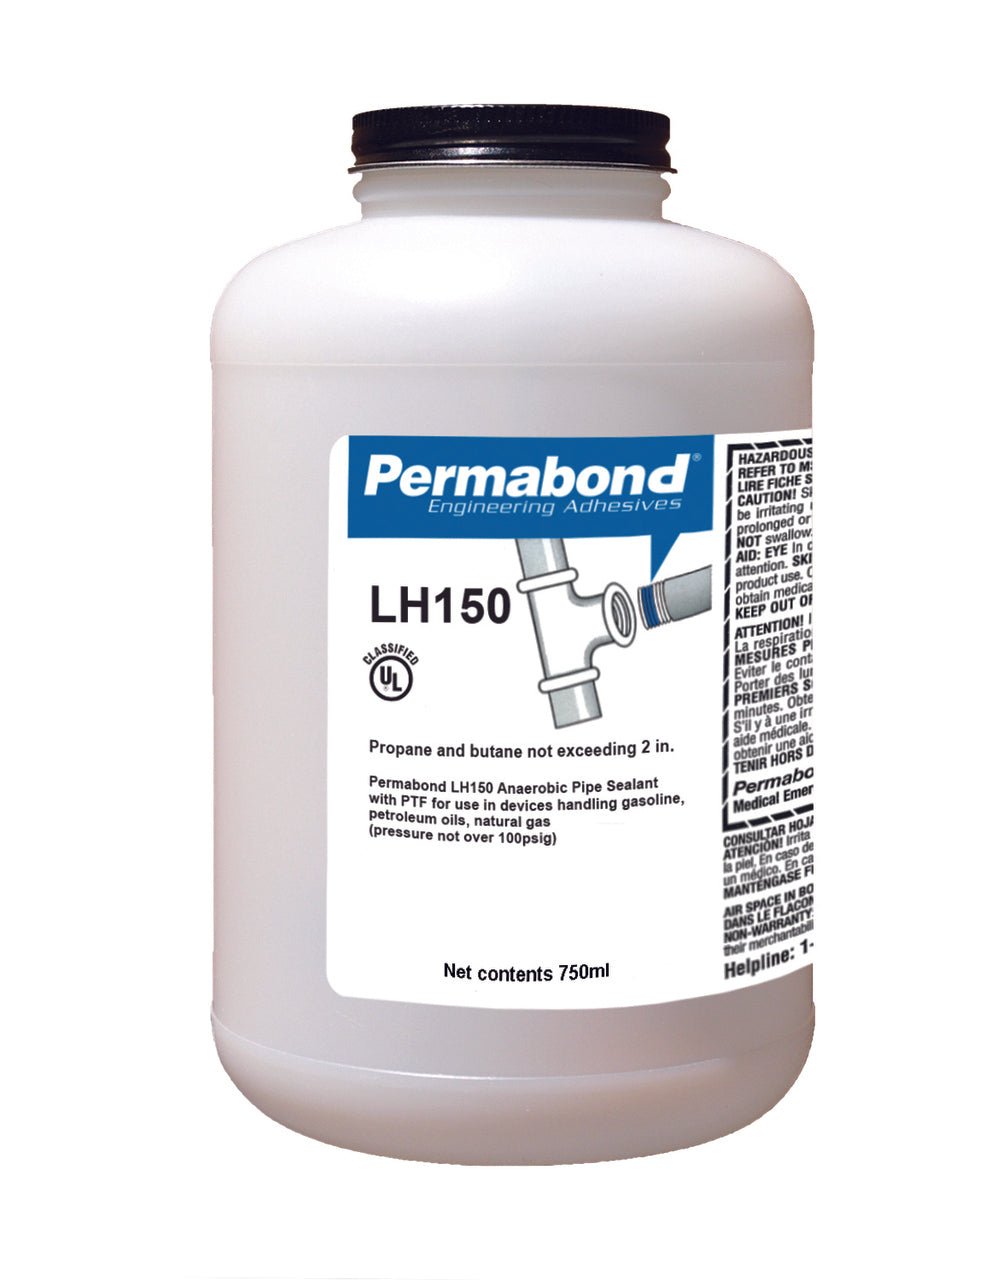 Permabond AA001500350B0101, LH150 Anaerobic Threadsealant, 350mL Bottle, Case of 12